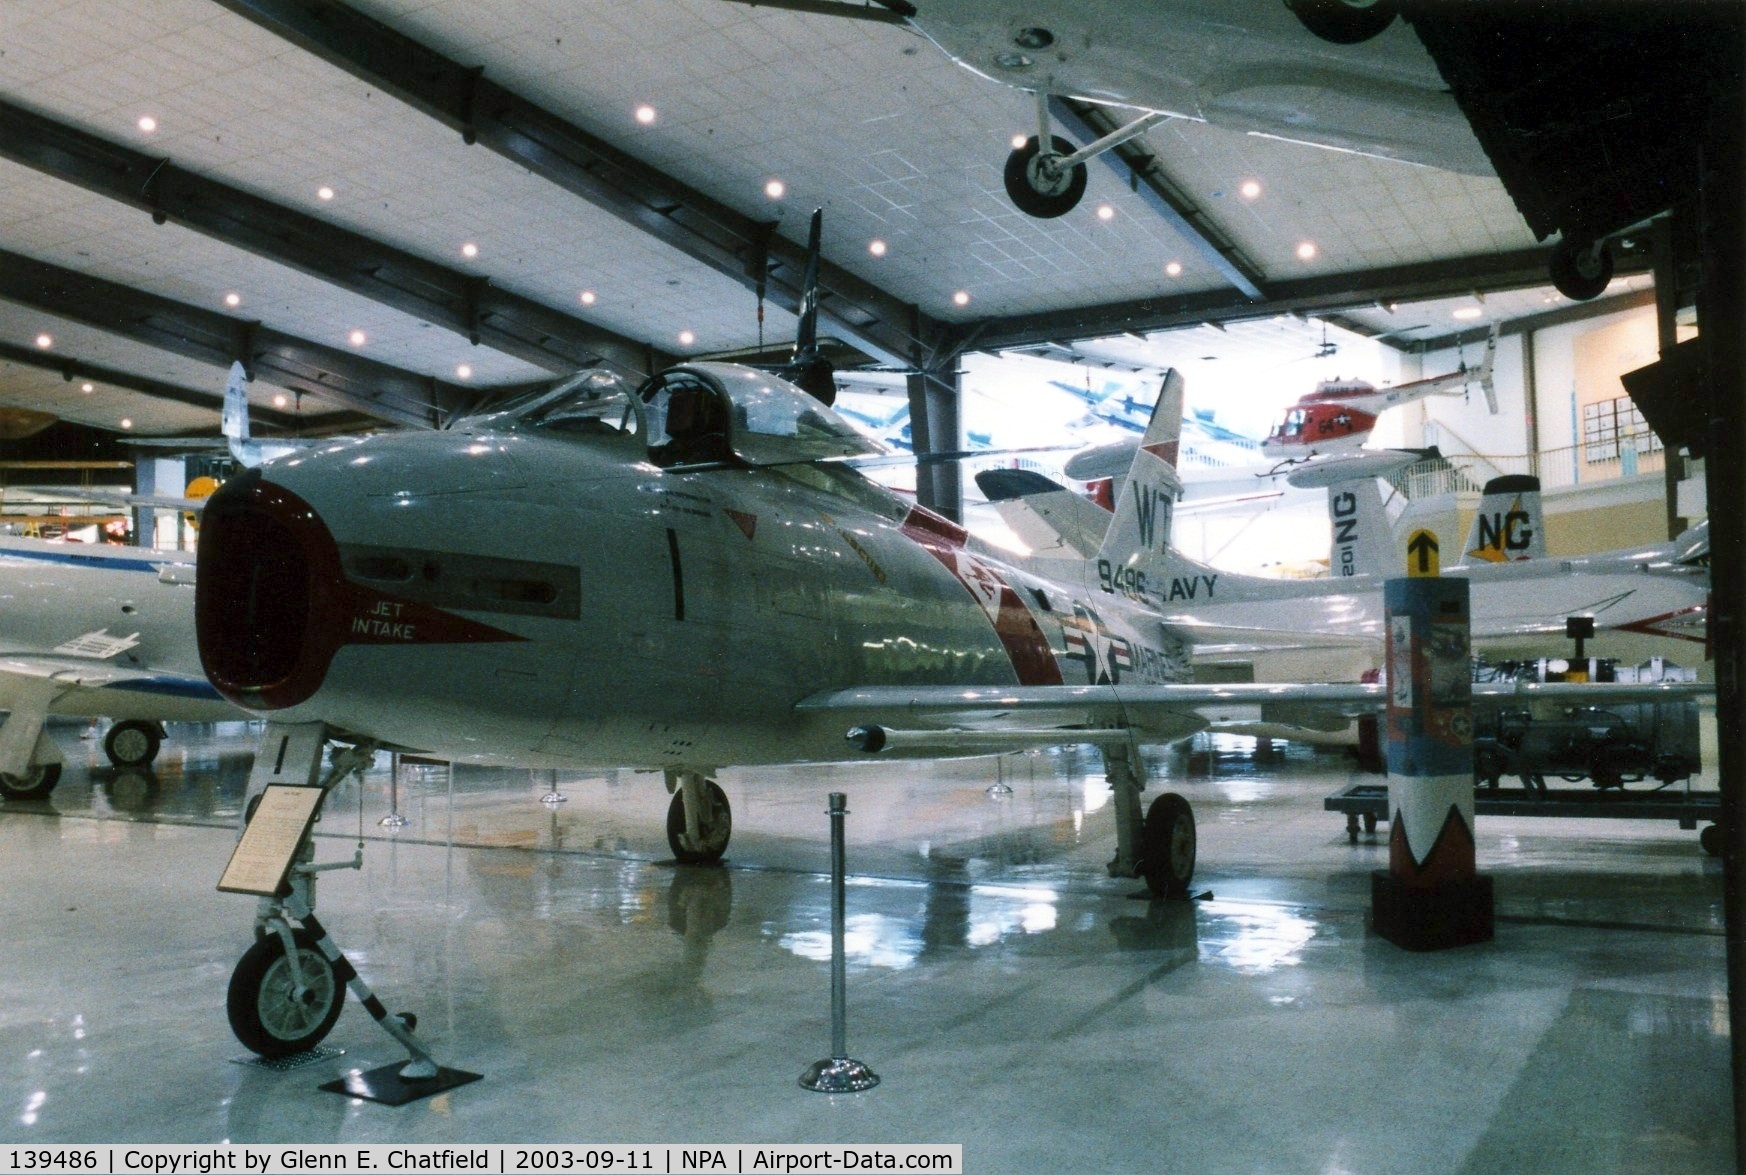 139486, 1957 North American FJ-4 Fury C/N 209-106, F-4E/FJ-4 at the National Museum of Naval Aviation